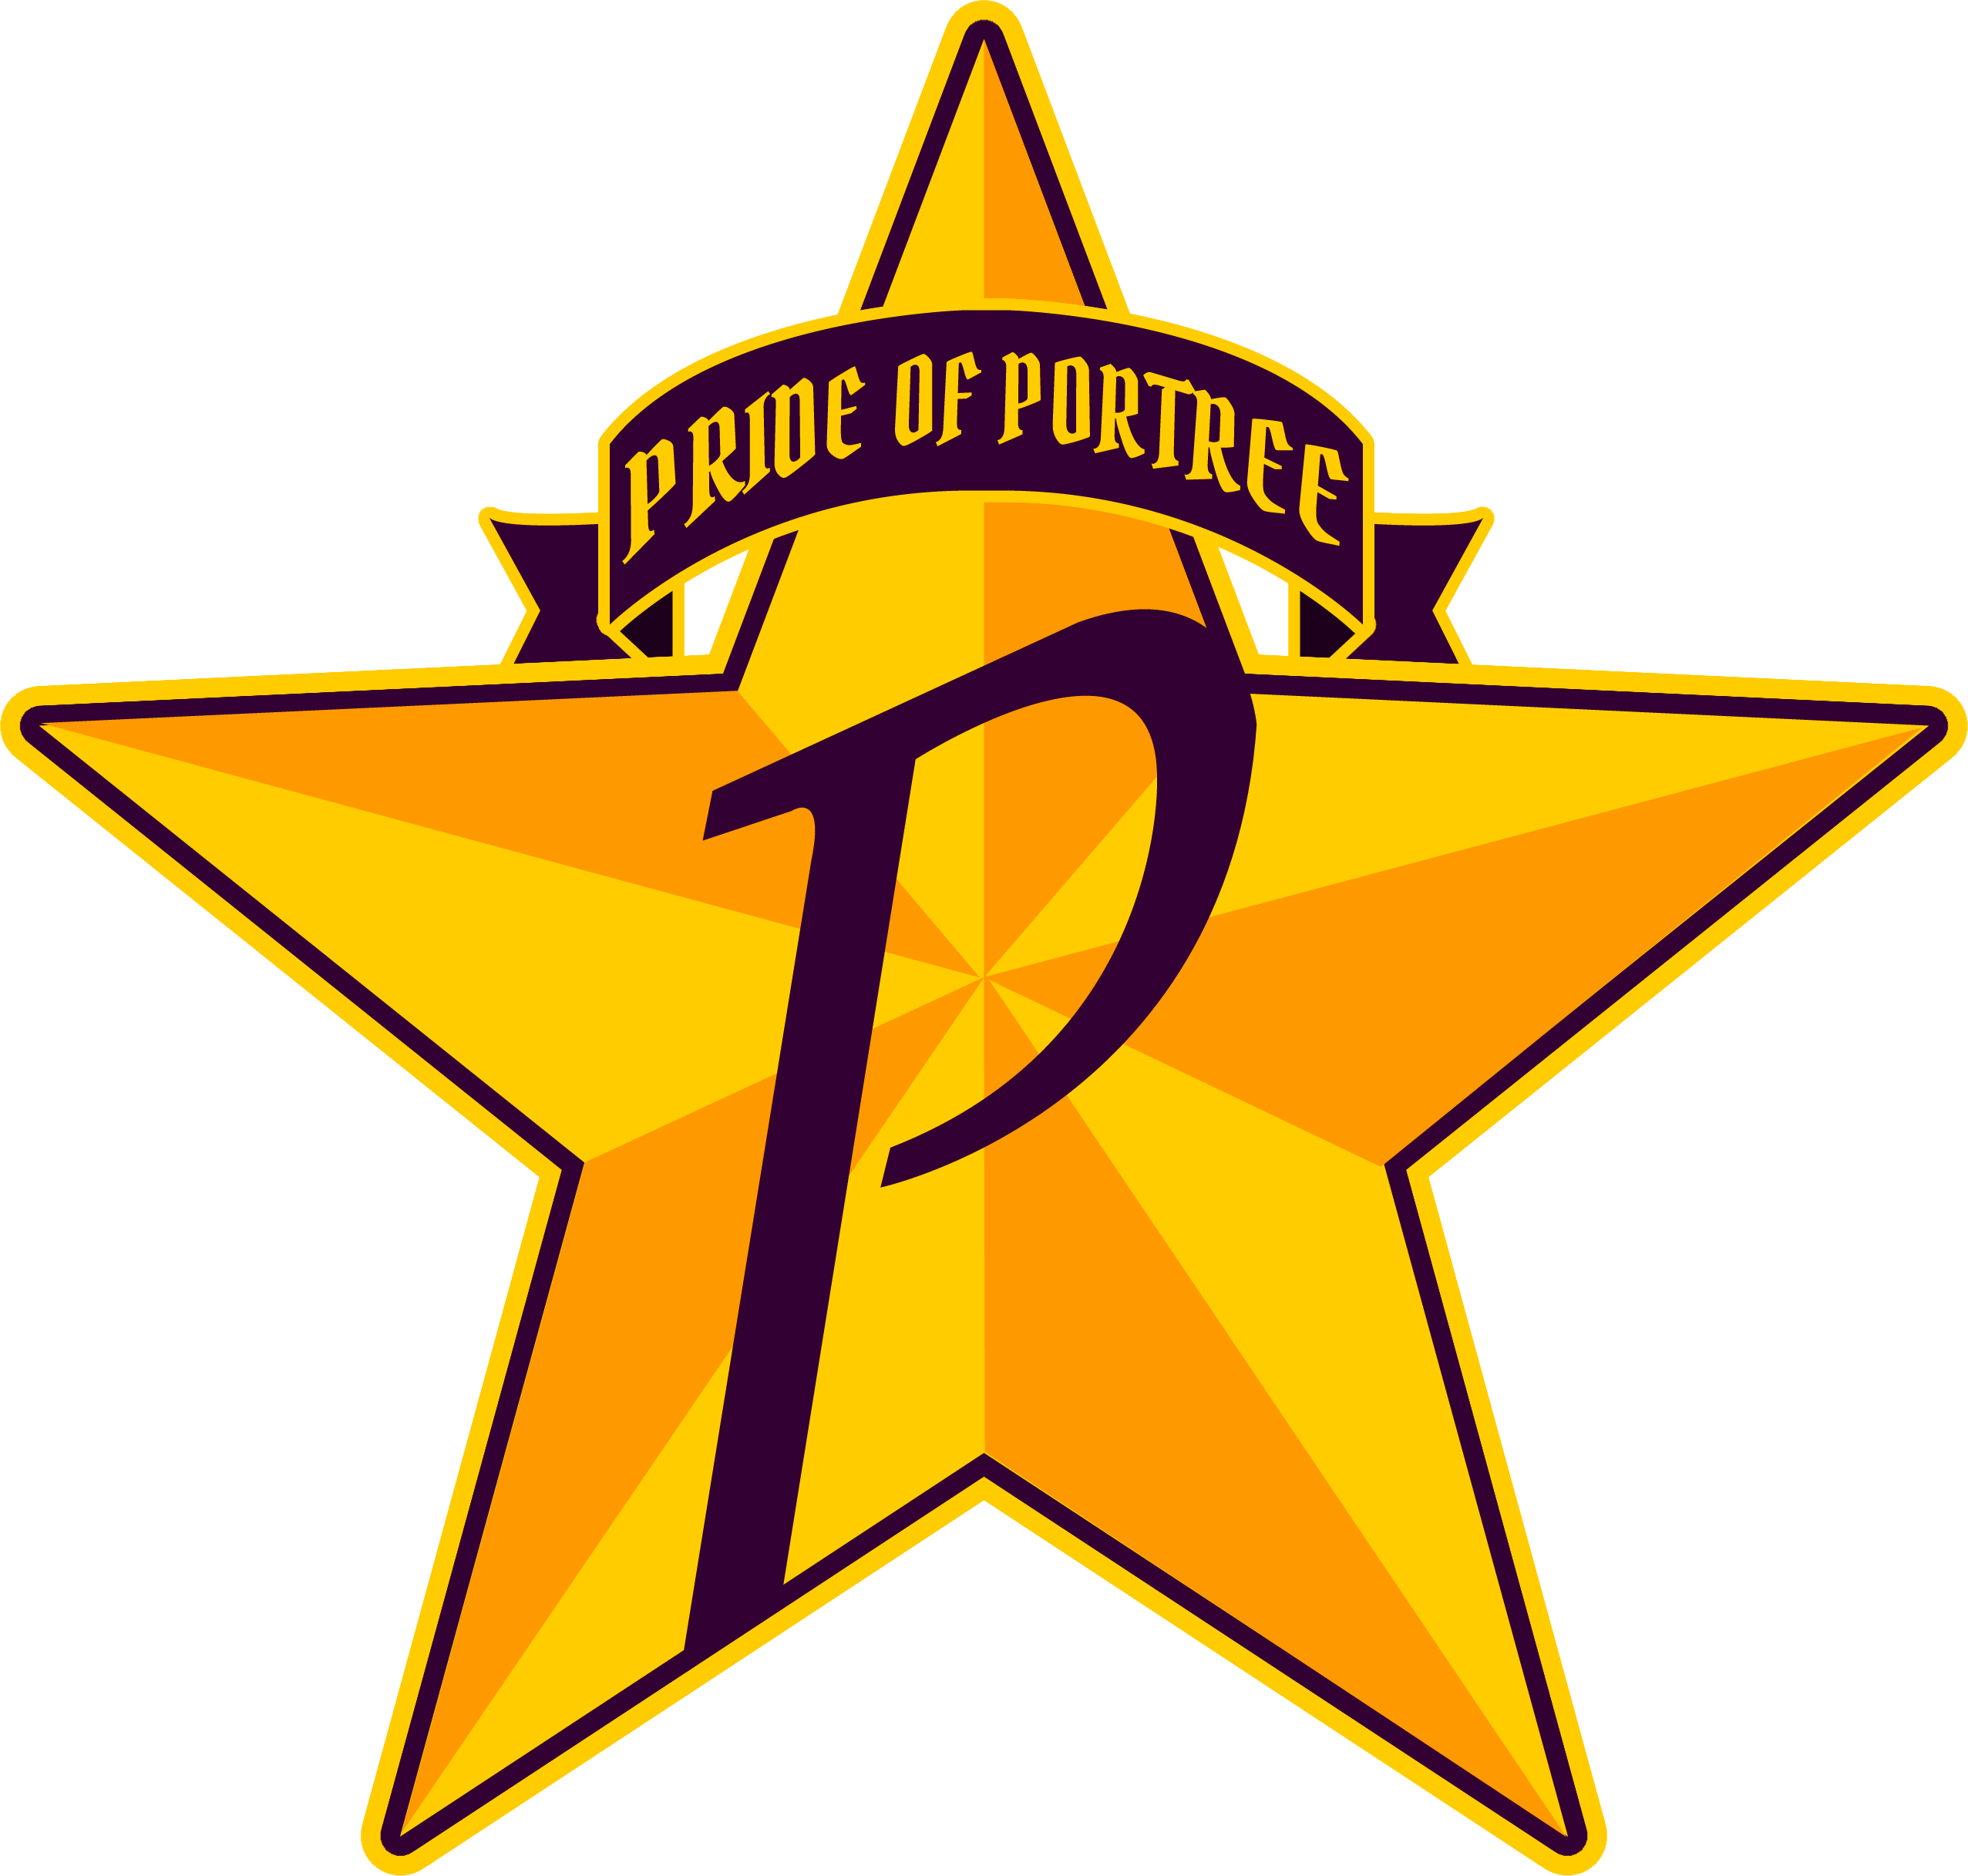 Pride of Portree logo 1